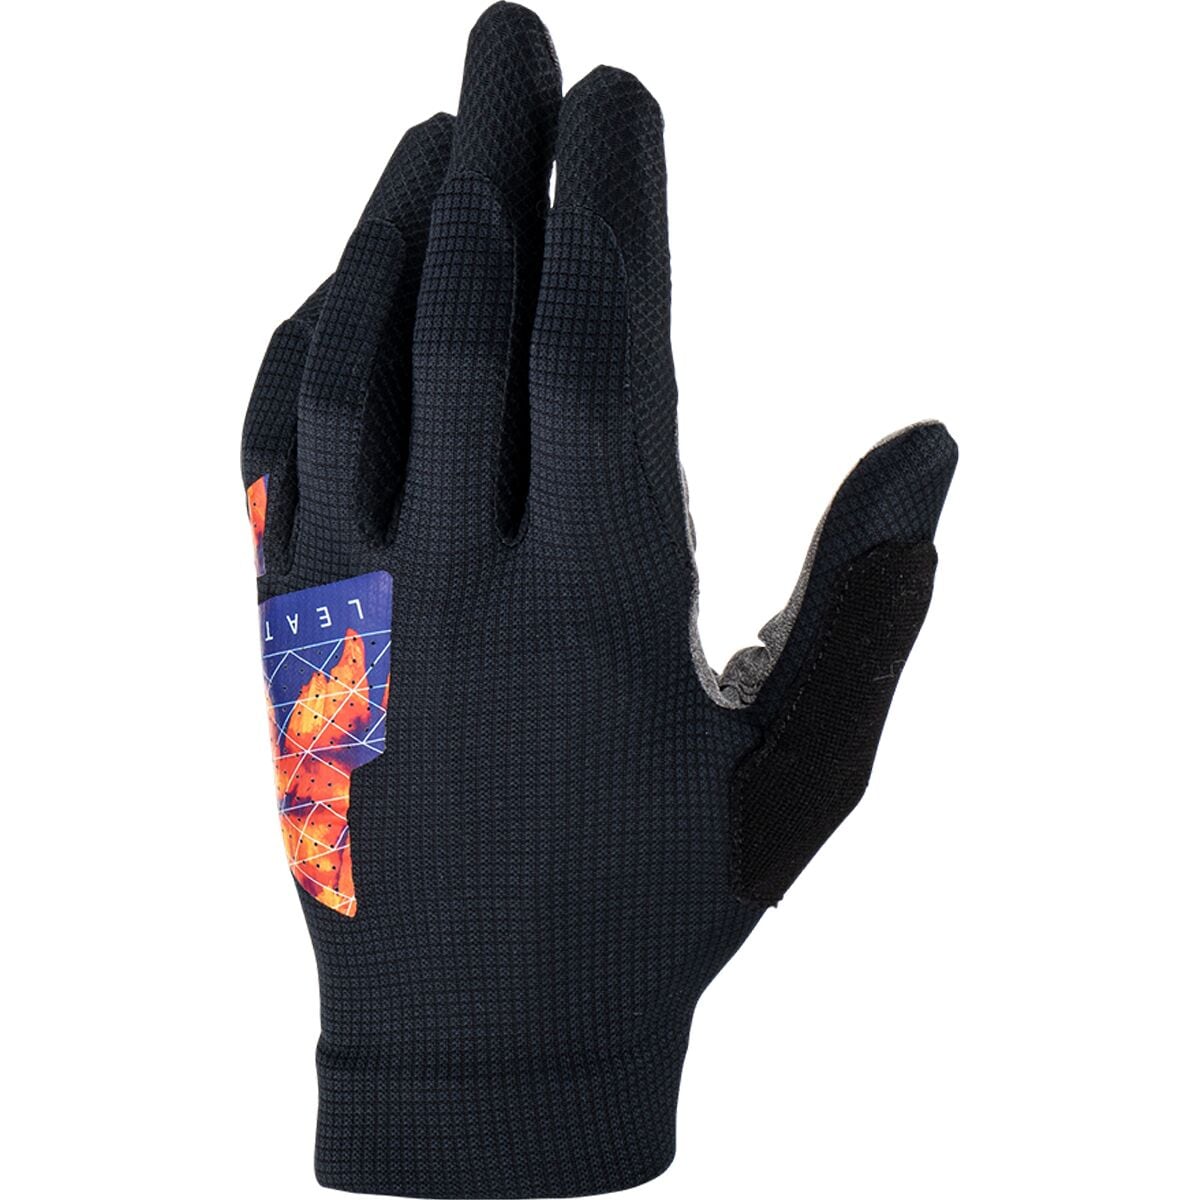 Leatt MTB 1.0 Glove - Men's